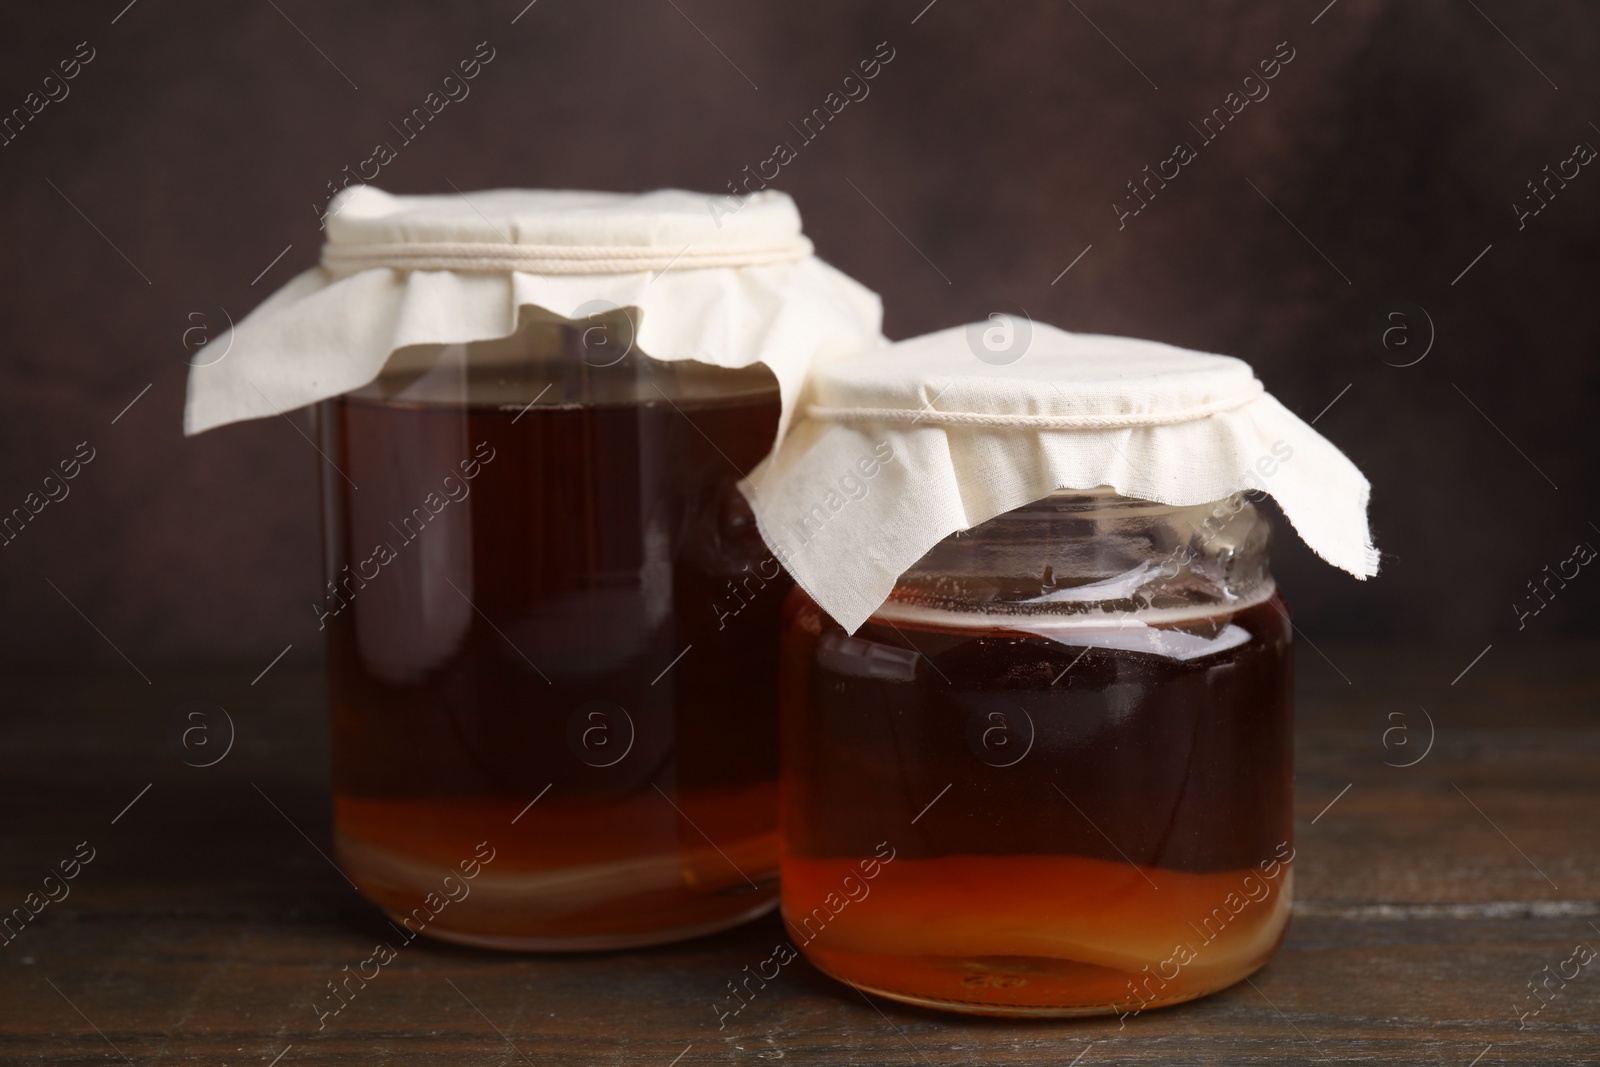 Photo of Tasty kombucha in glass jars on wooden table